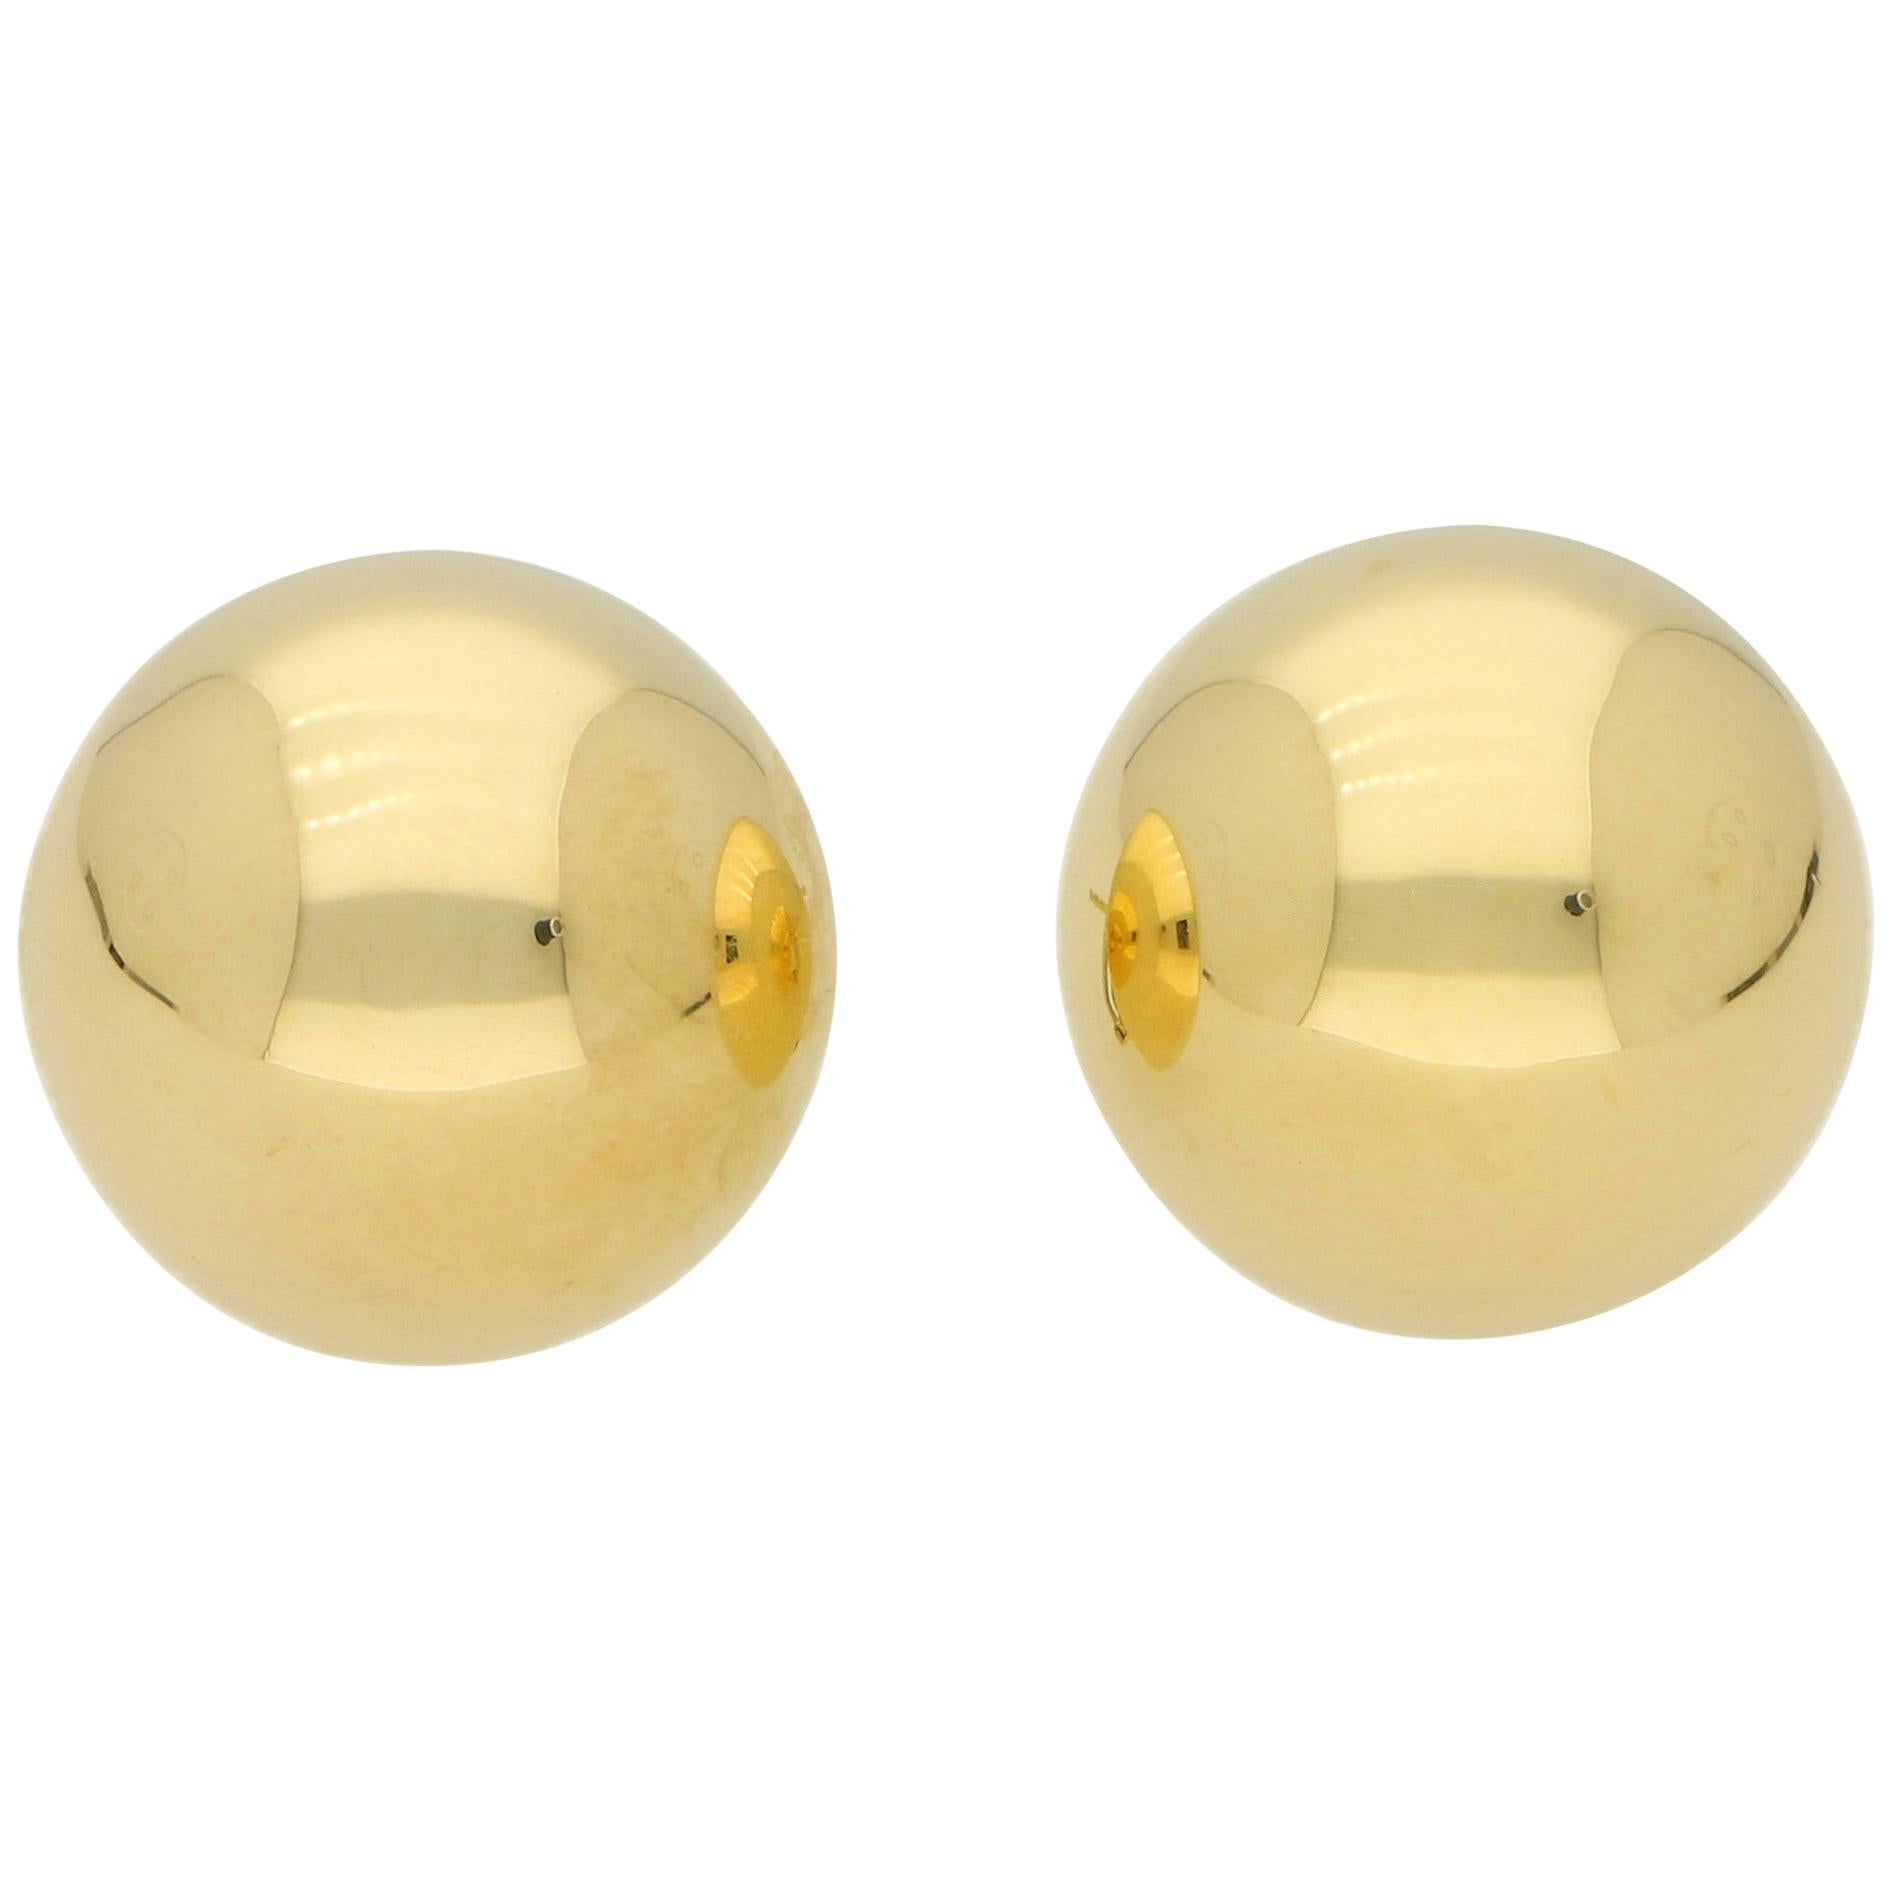 Large Circular Dome Earrings Set in 14 Karat Yellow Gold